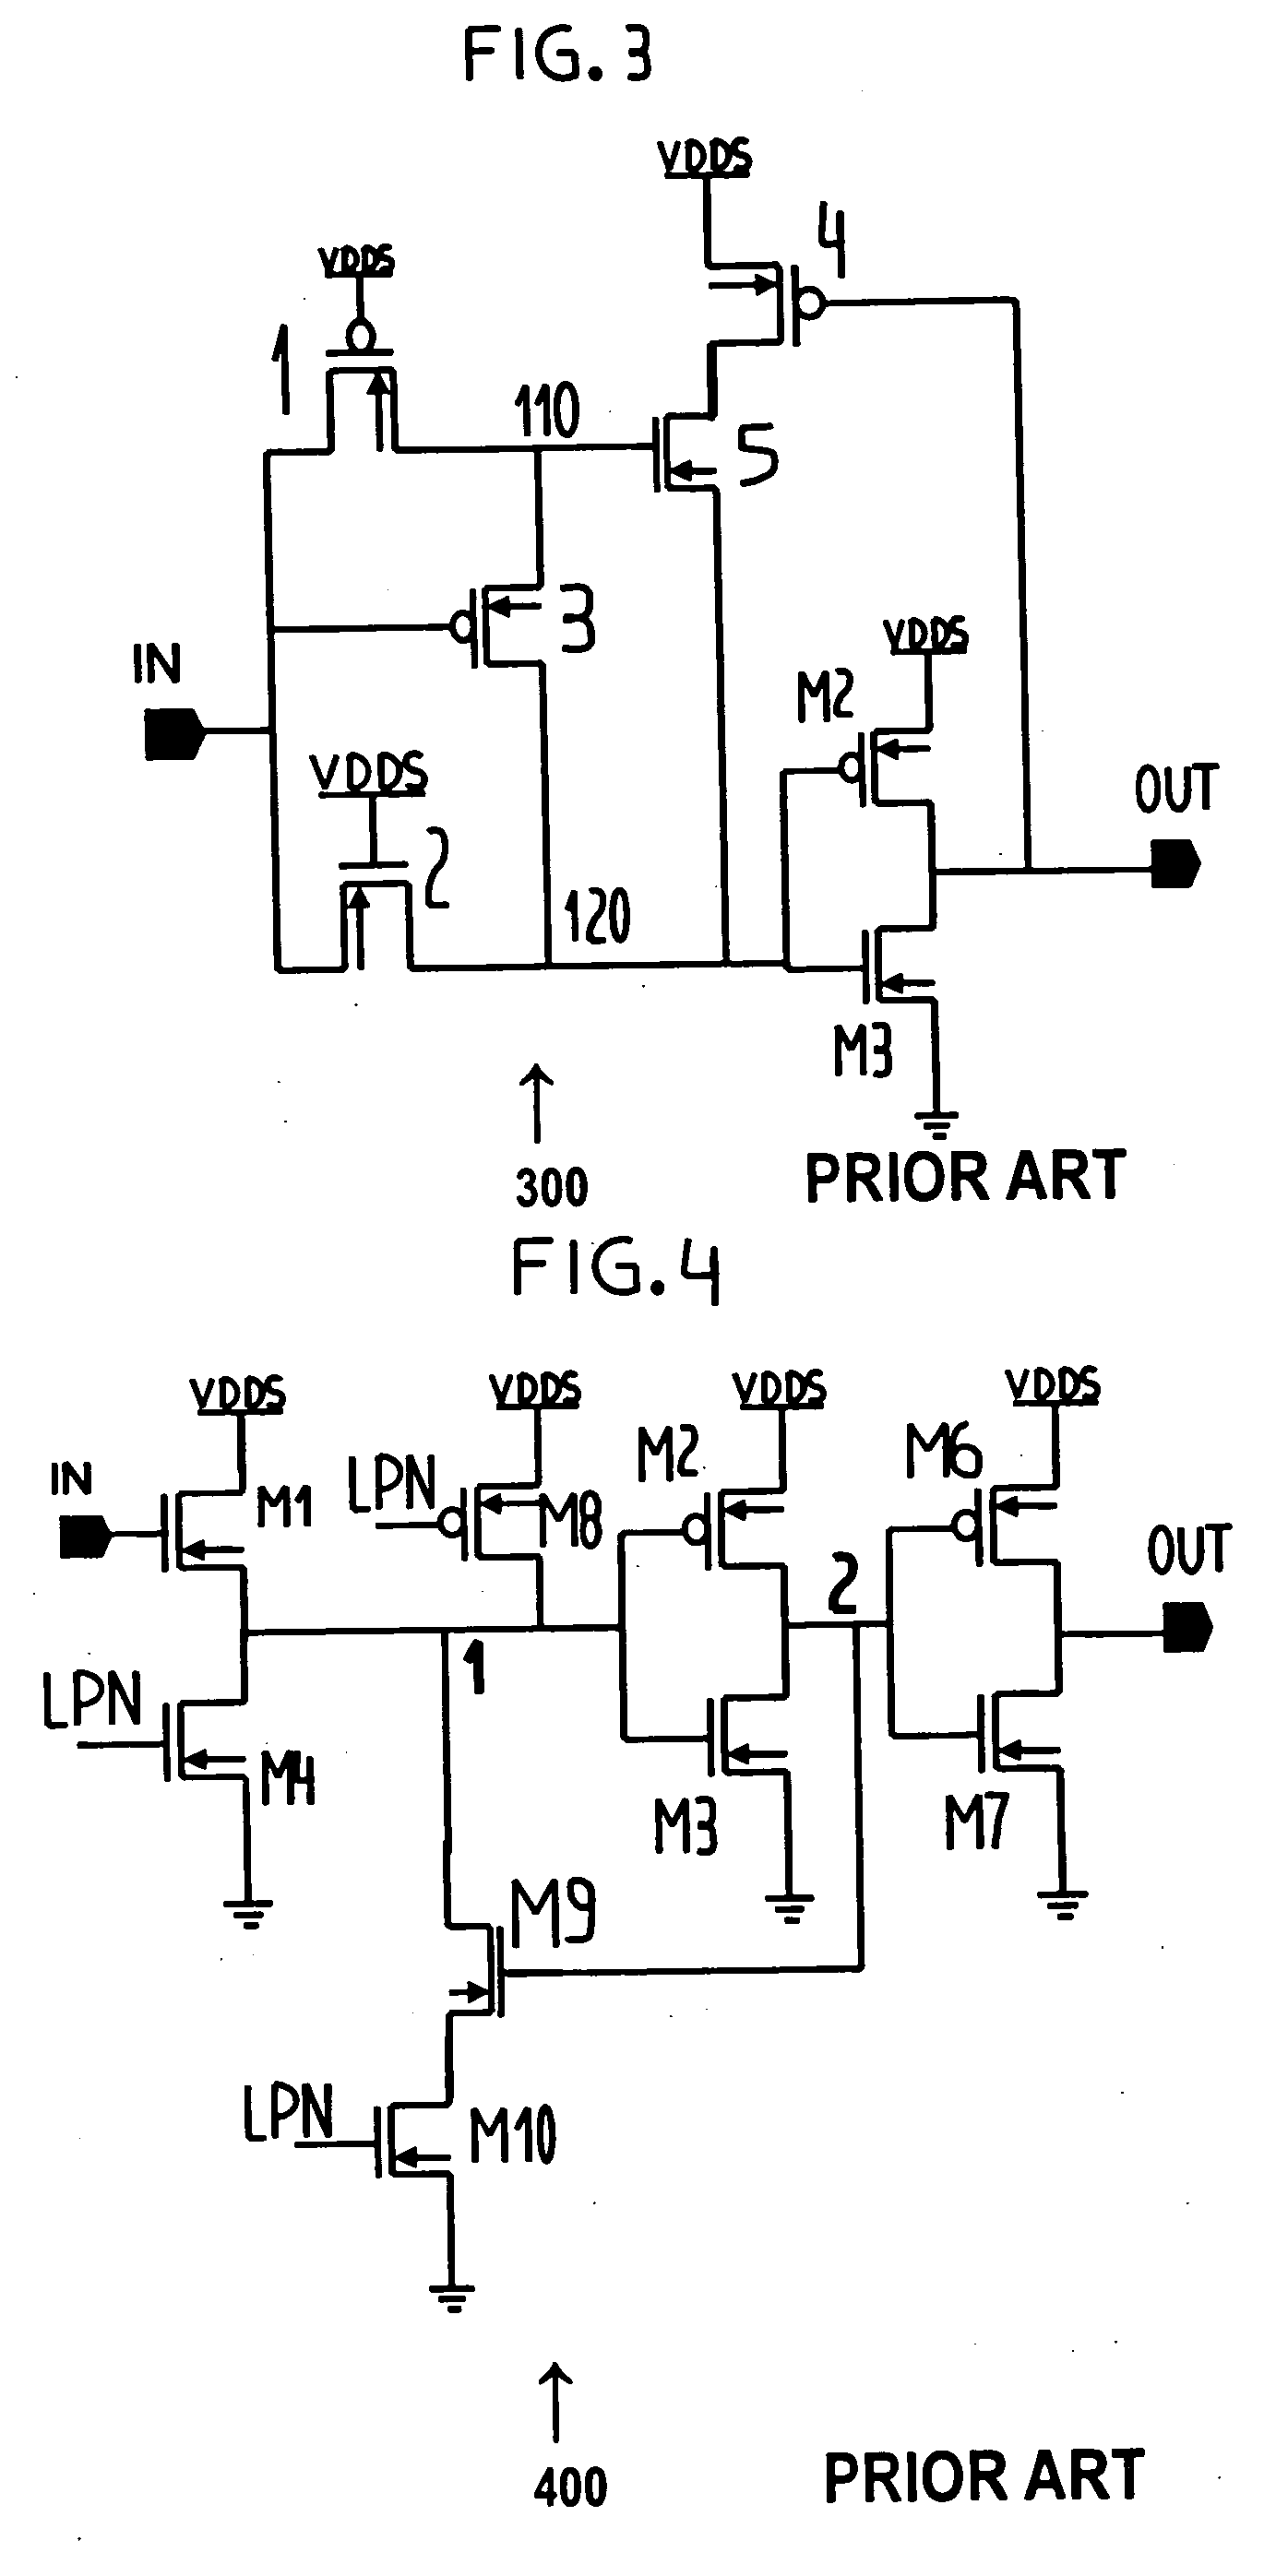 High-voltage tolerant input buffer circuit